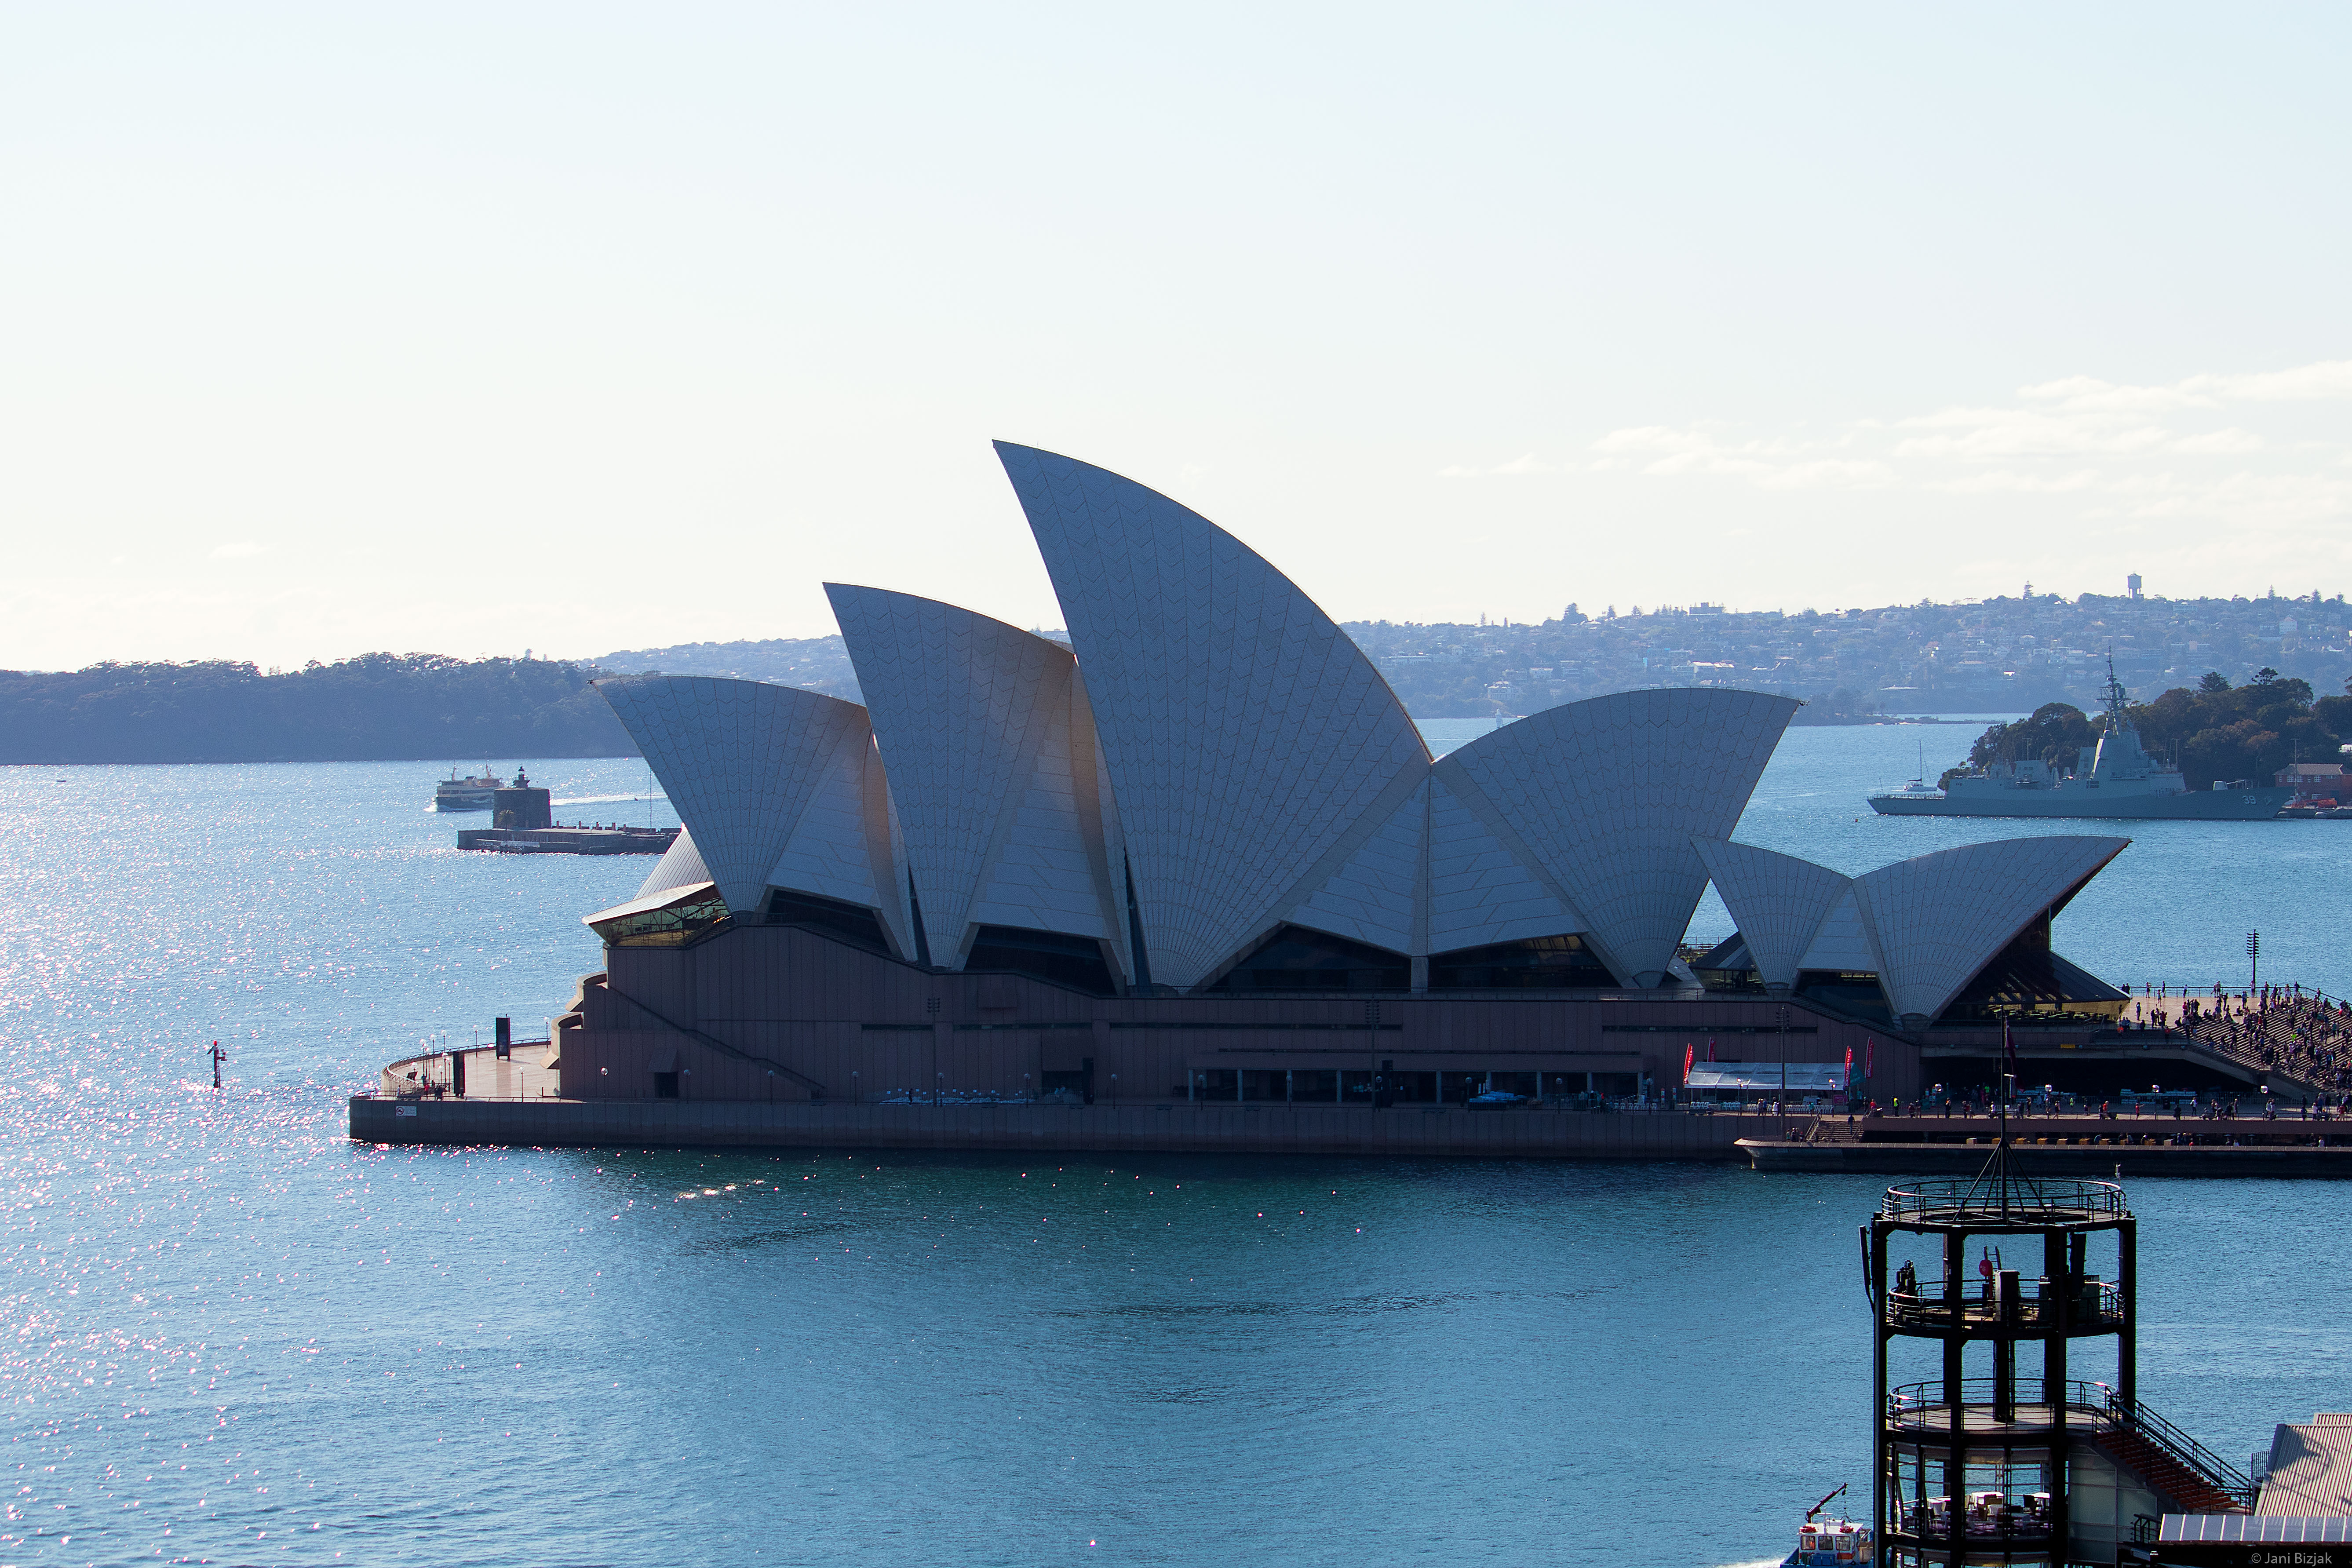 Sydney's opera